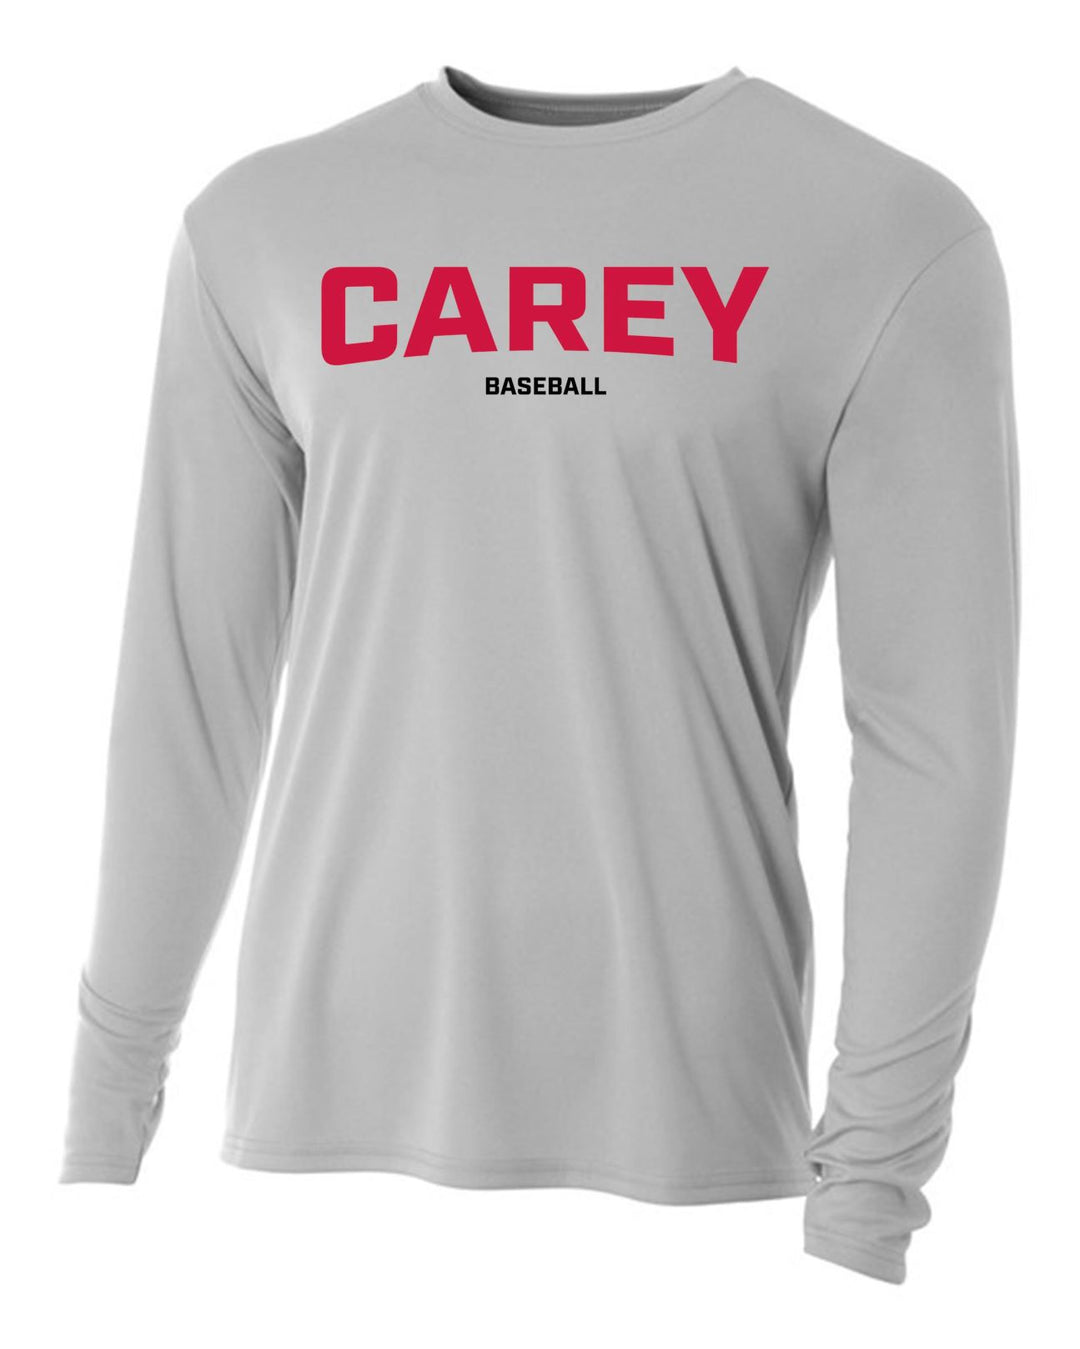 WCU Baseball Youth Long-Sleeve Performance Shirt WCU Baseball Silver CAREY - Third Coast Soccer